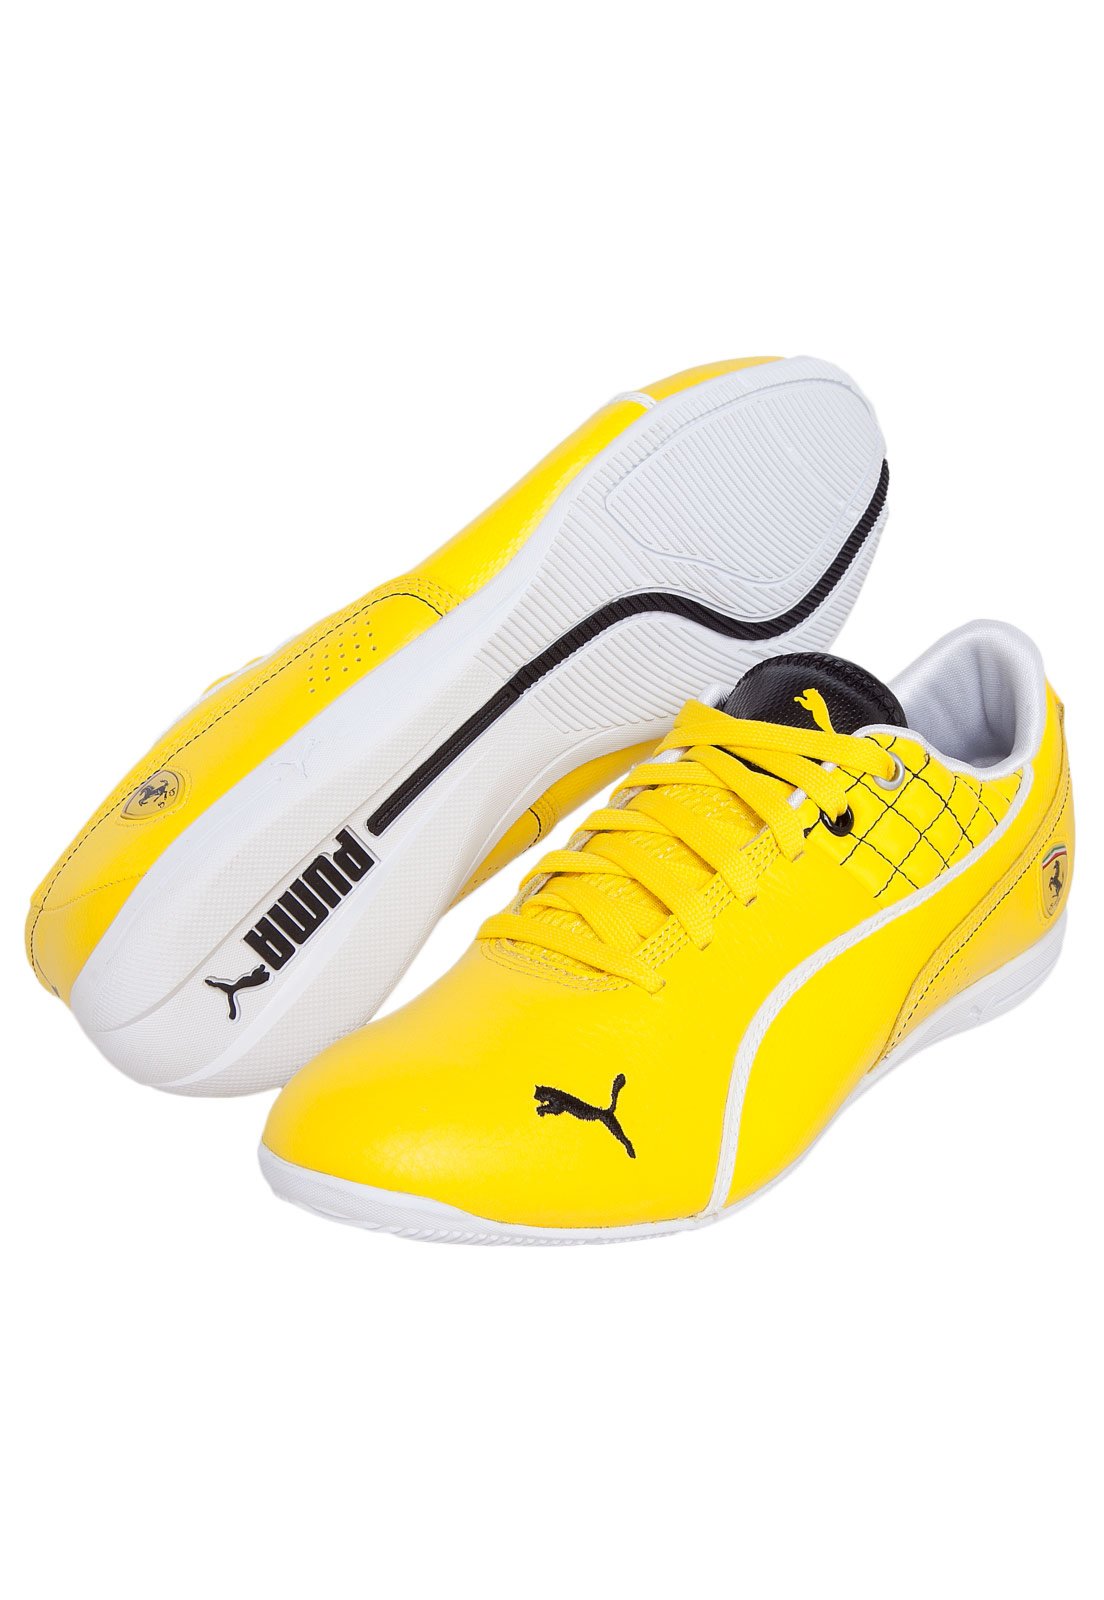 tenis puma masculino amarelo